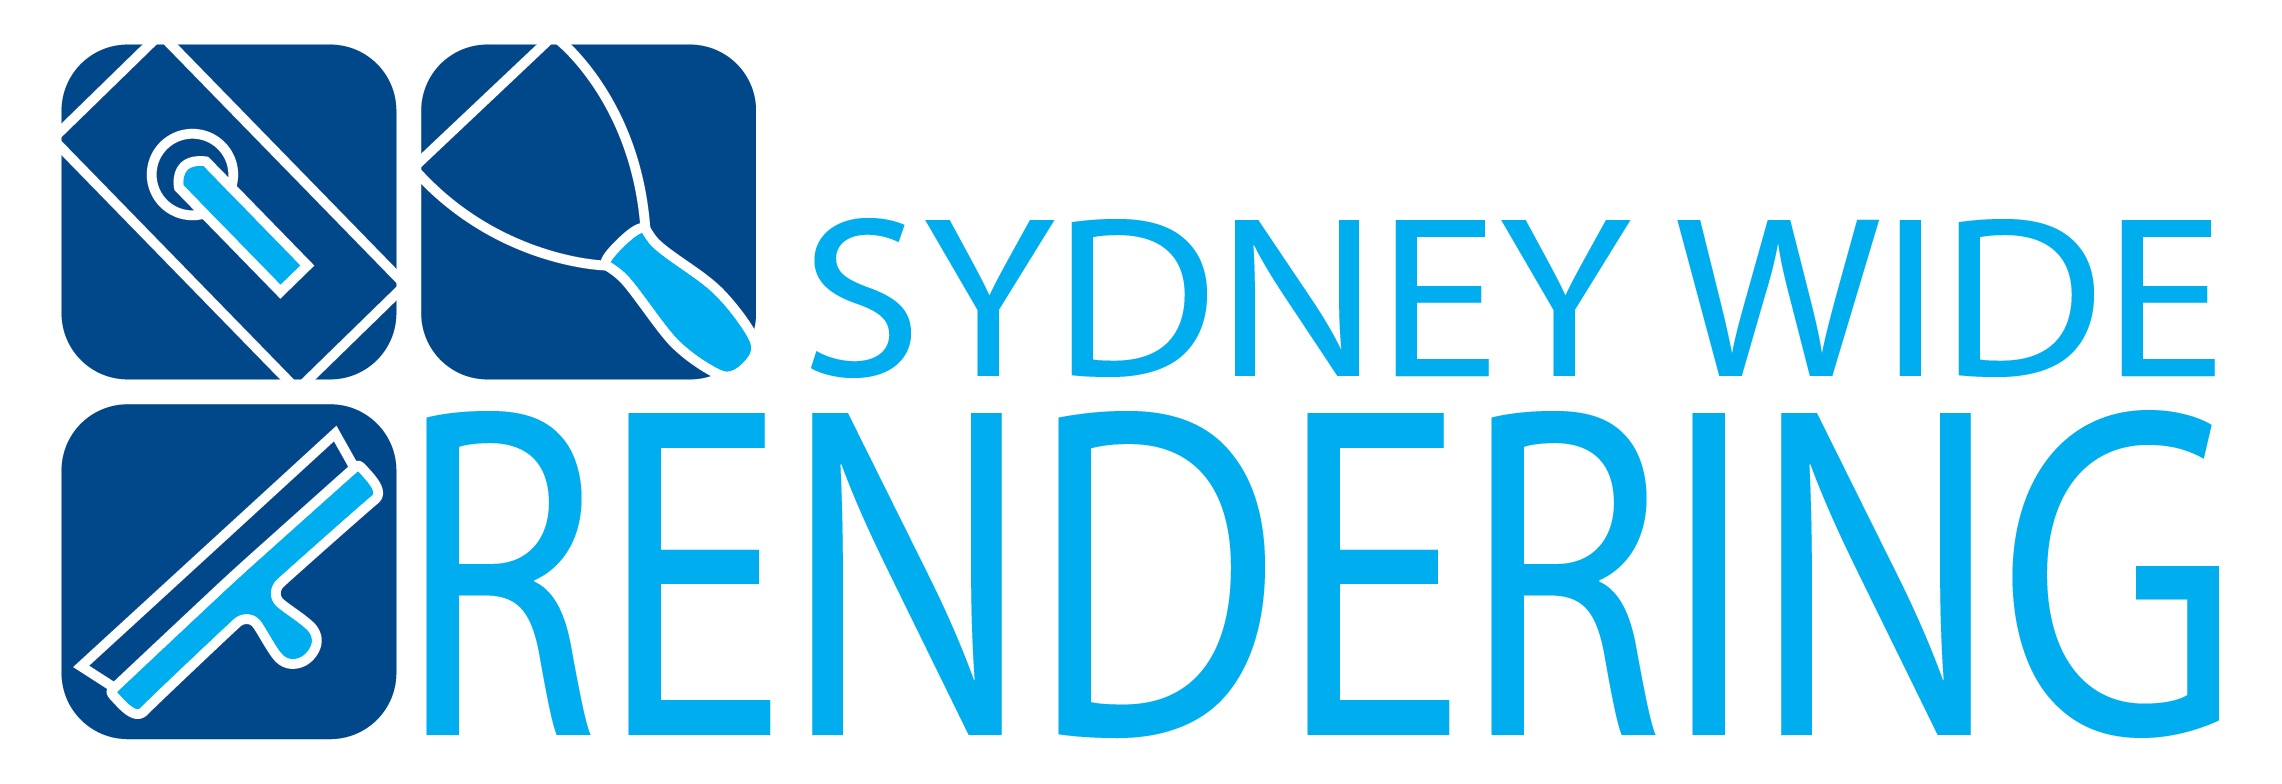 Sydney Wide Rendering Services – Sydney Wide Rendering Services